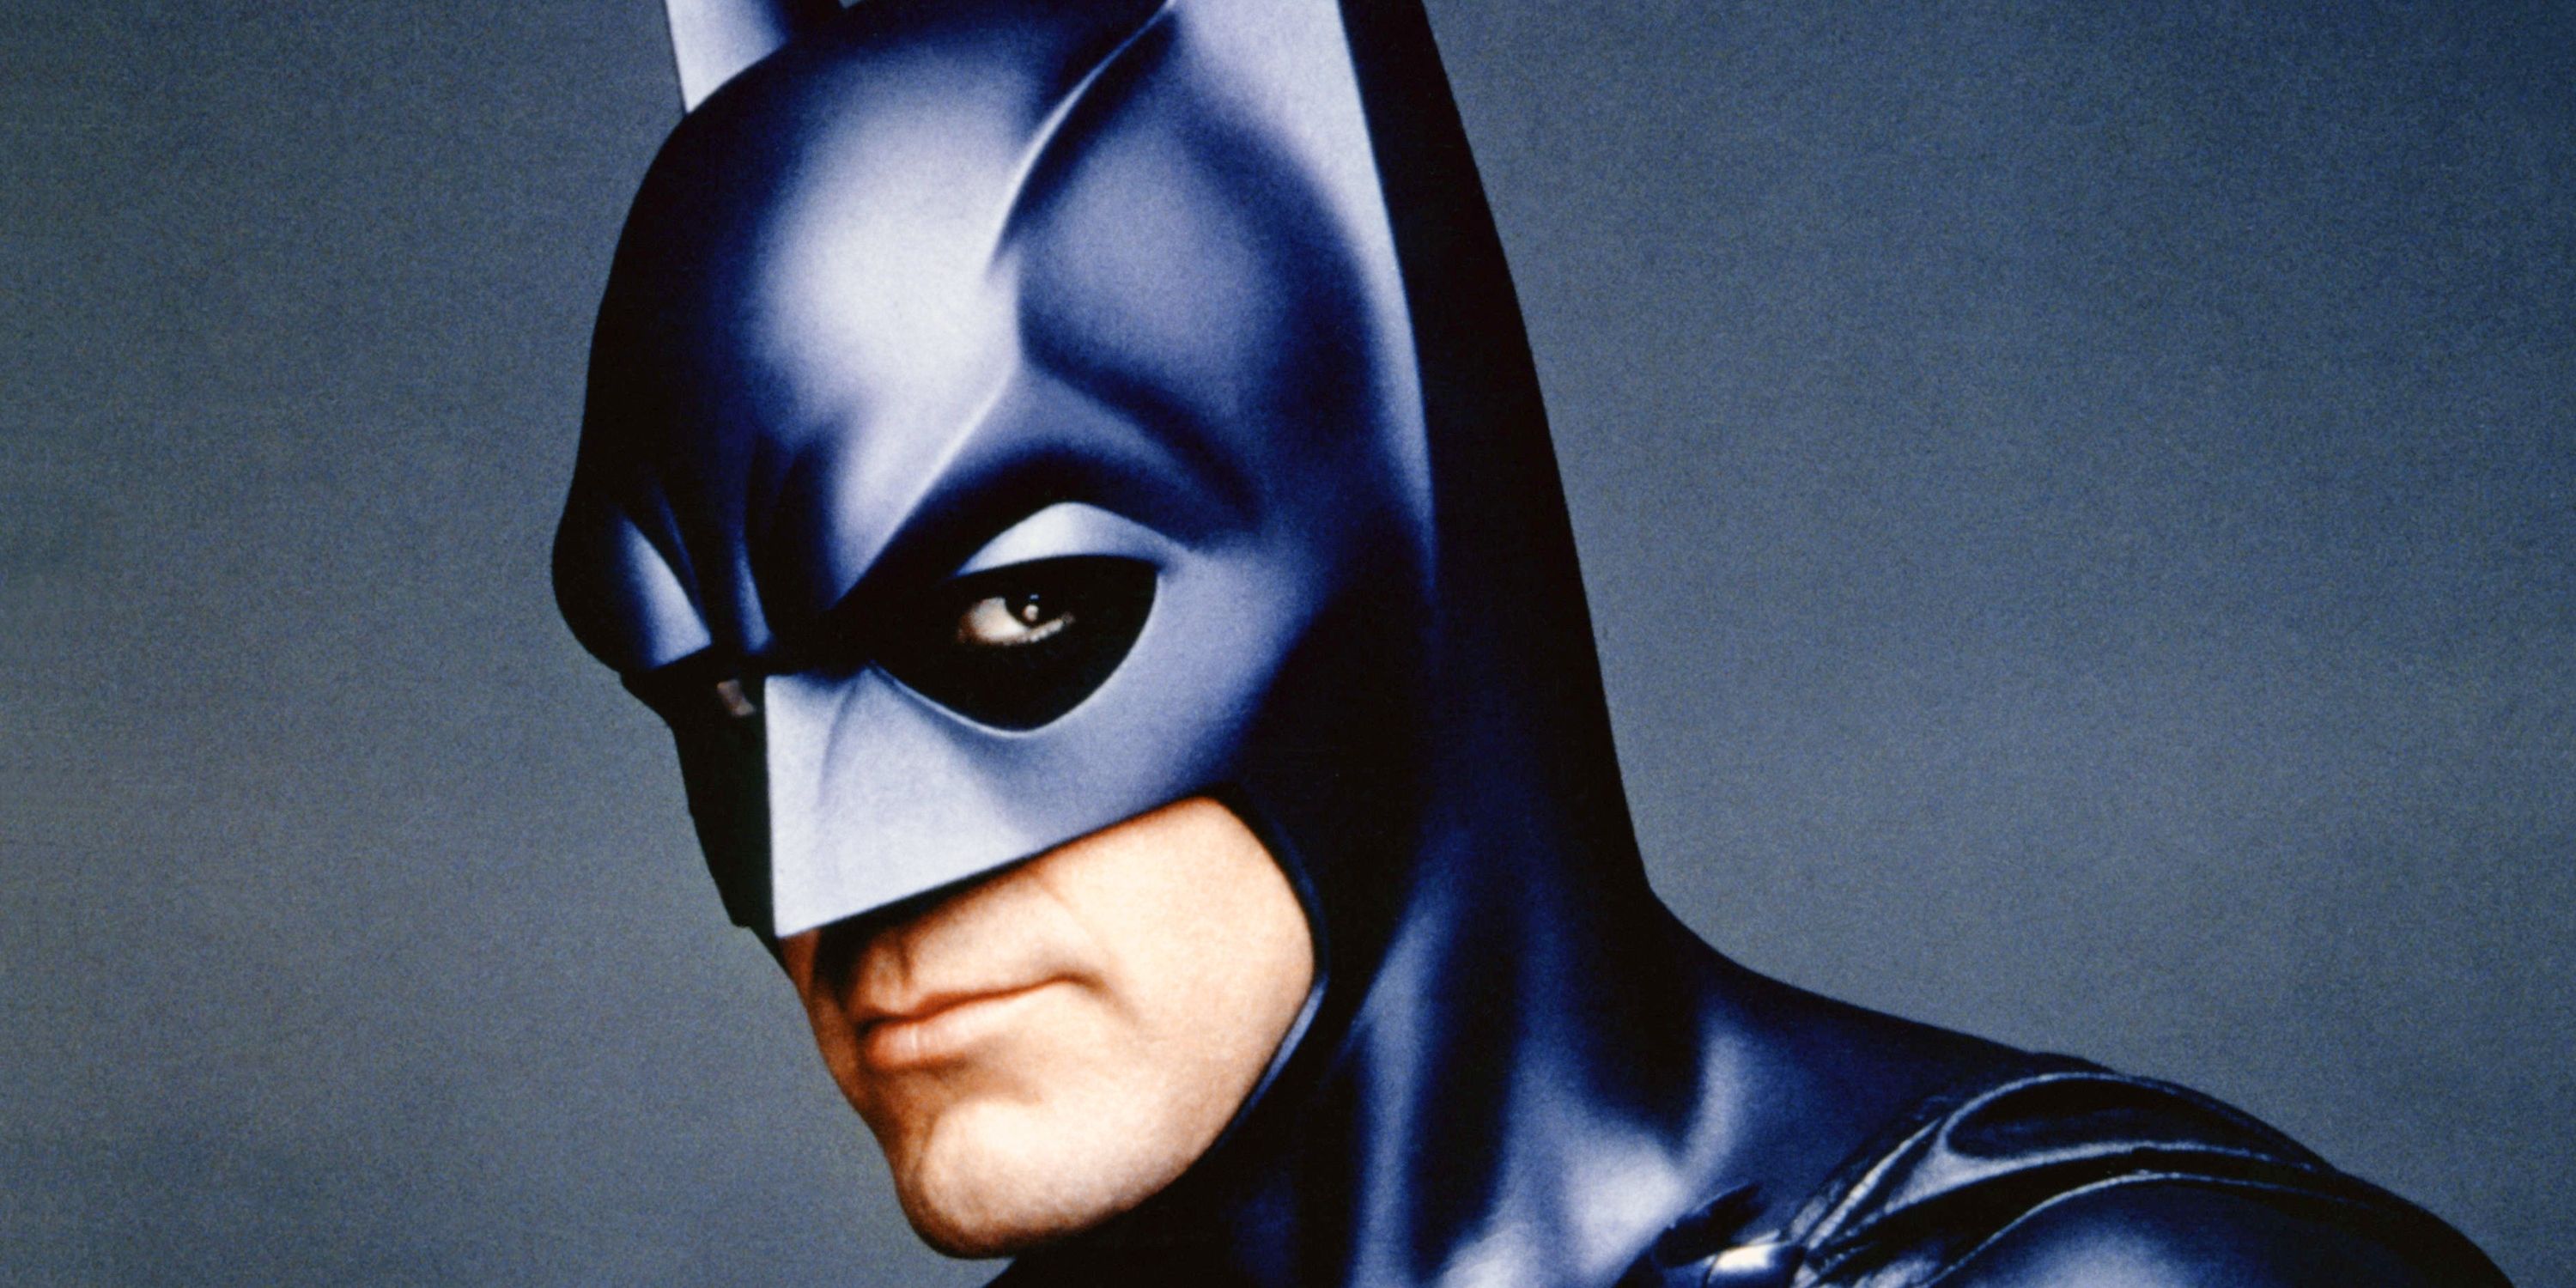 George Clooney as Batman in Batman and Robin